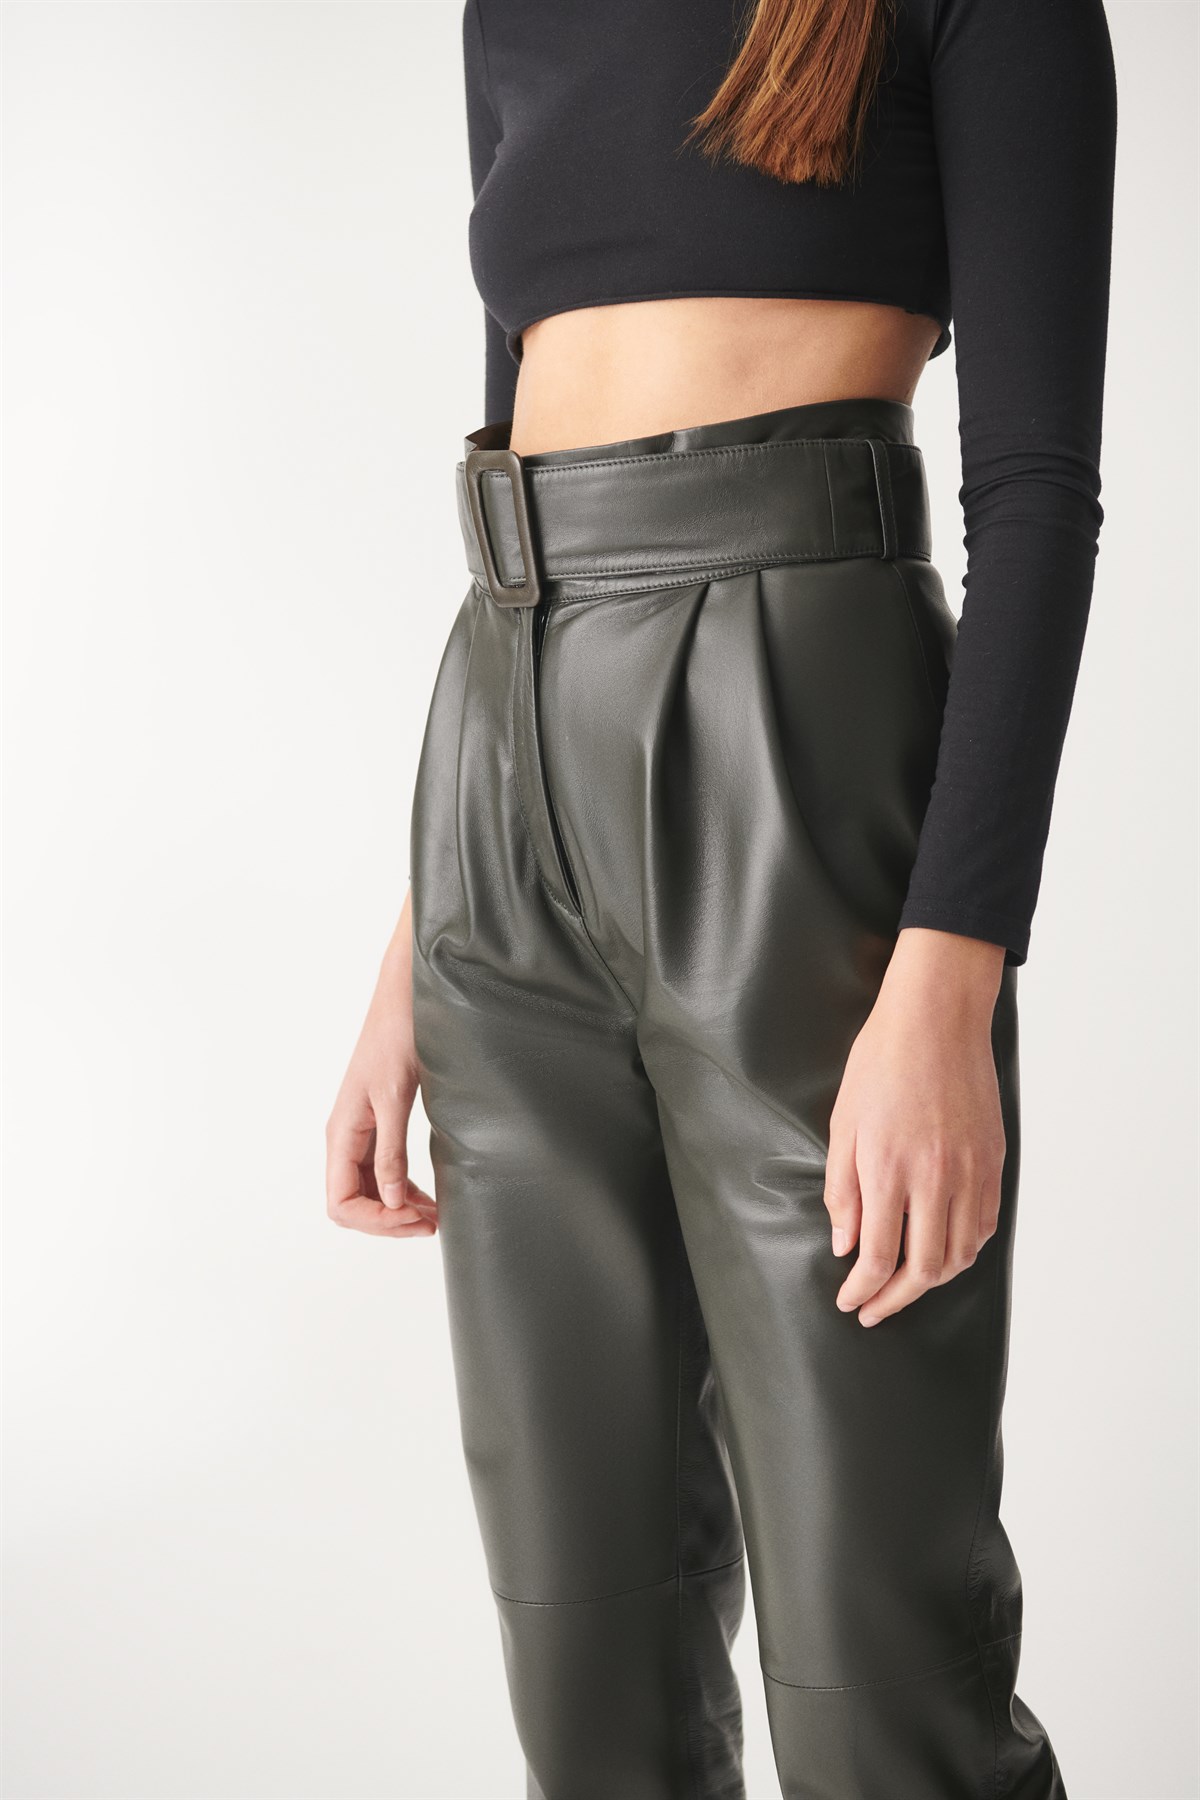 HAZEL Green Sport Leather Trousers  Womens Leather Pants